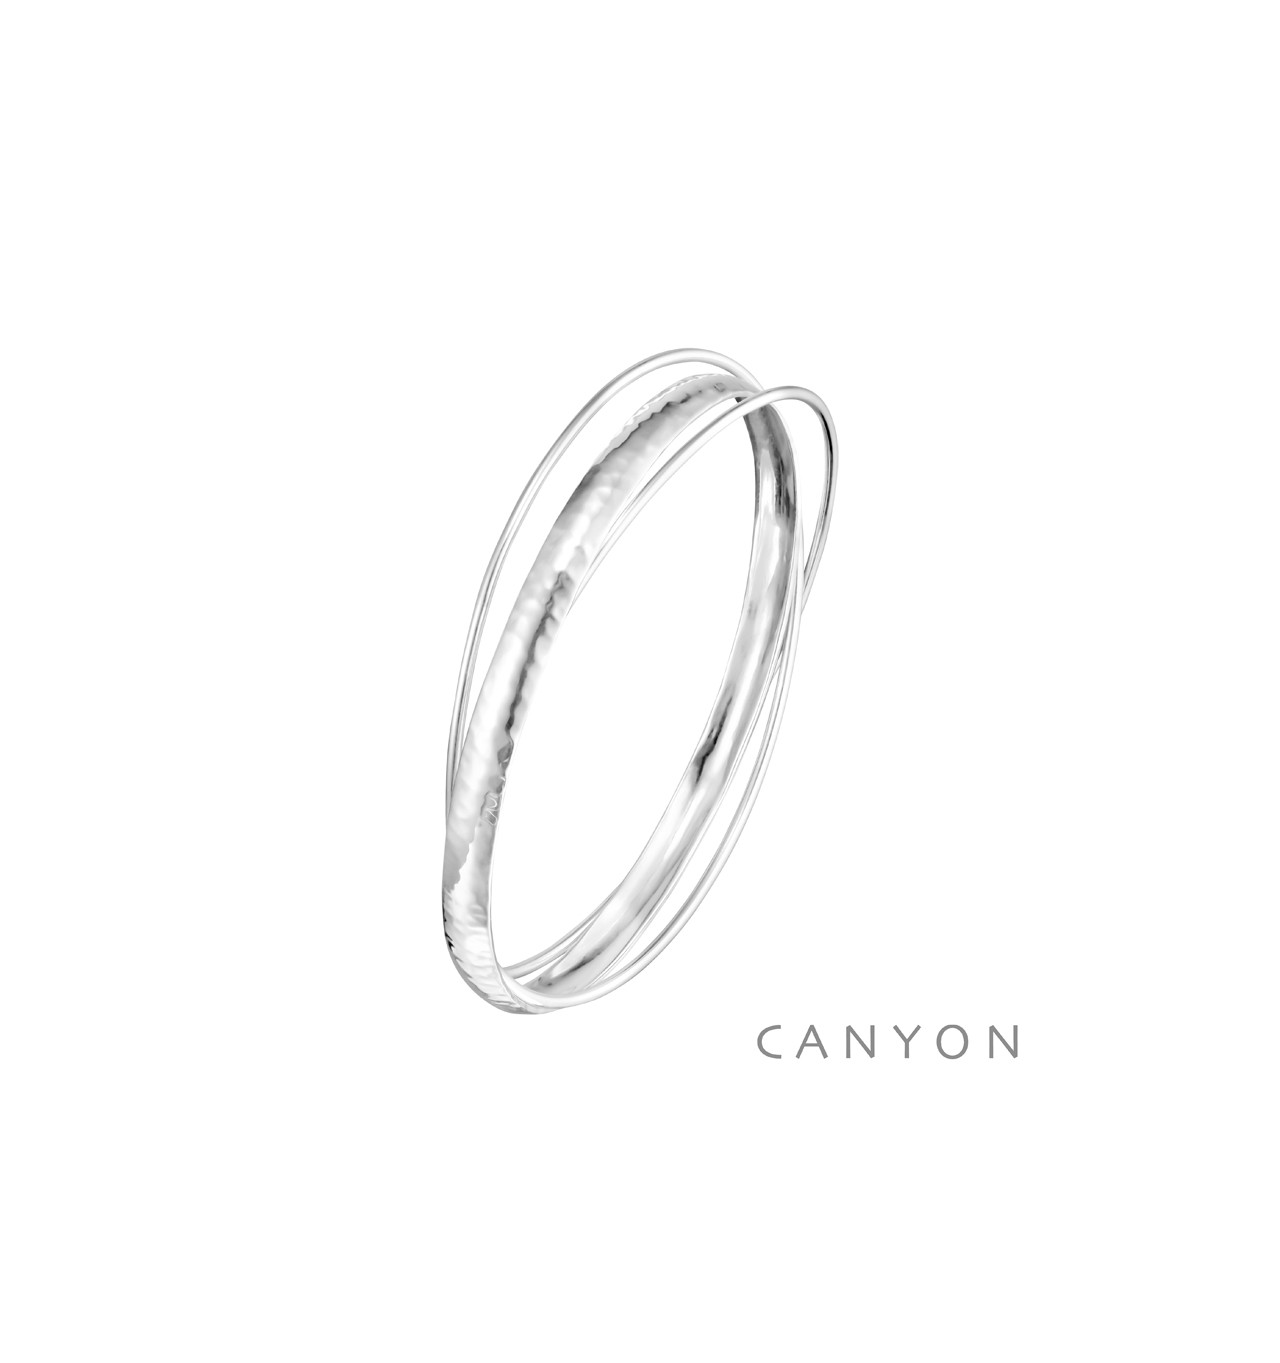 canyon france-bracelet-argent-3 joncs-bijoux totem